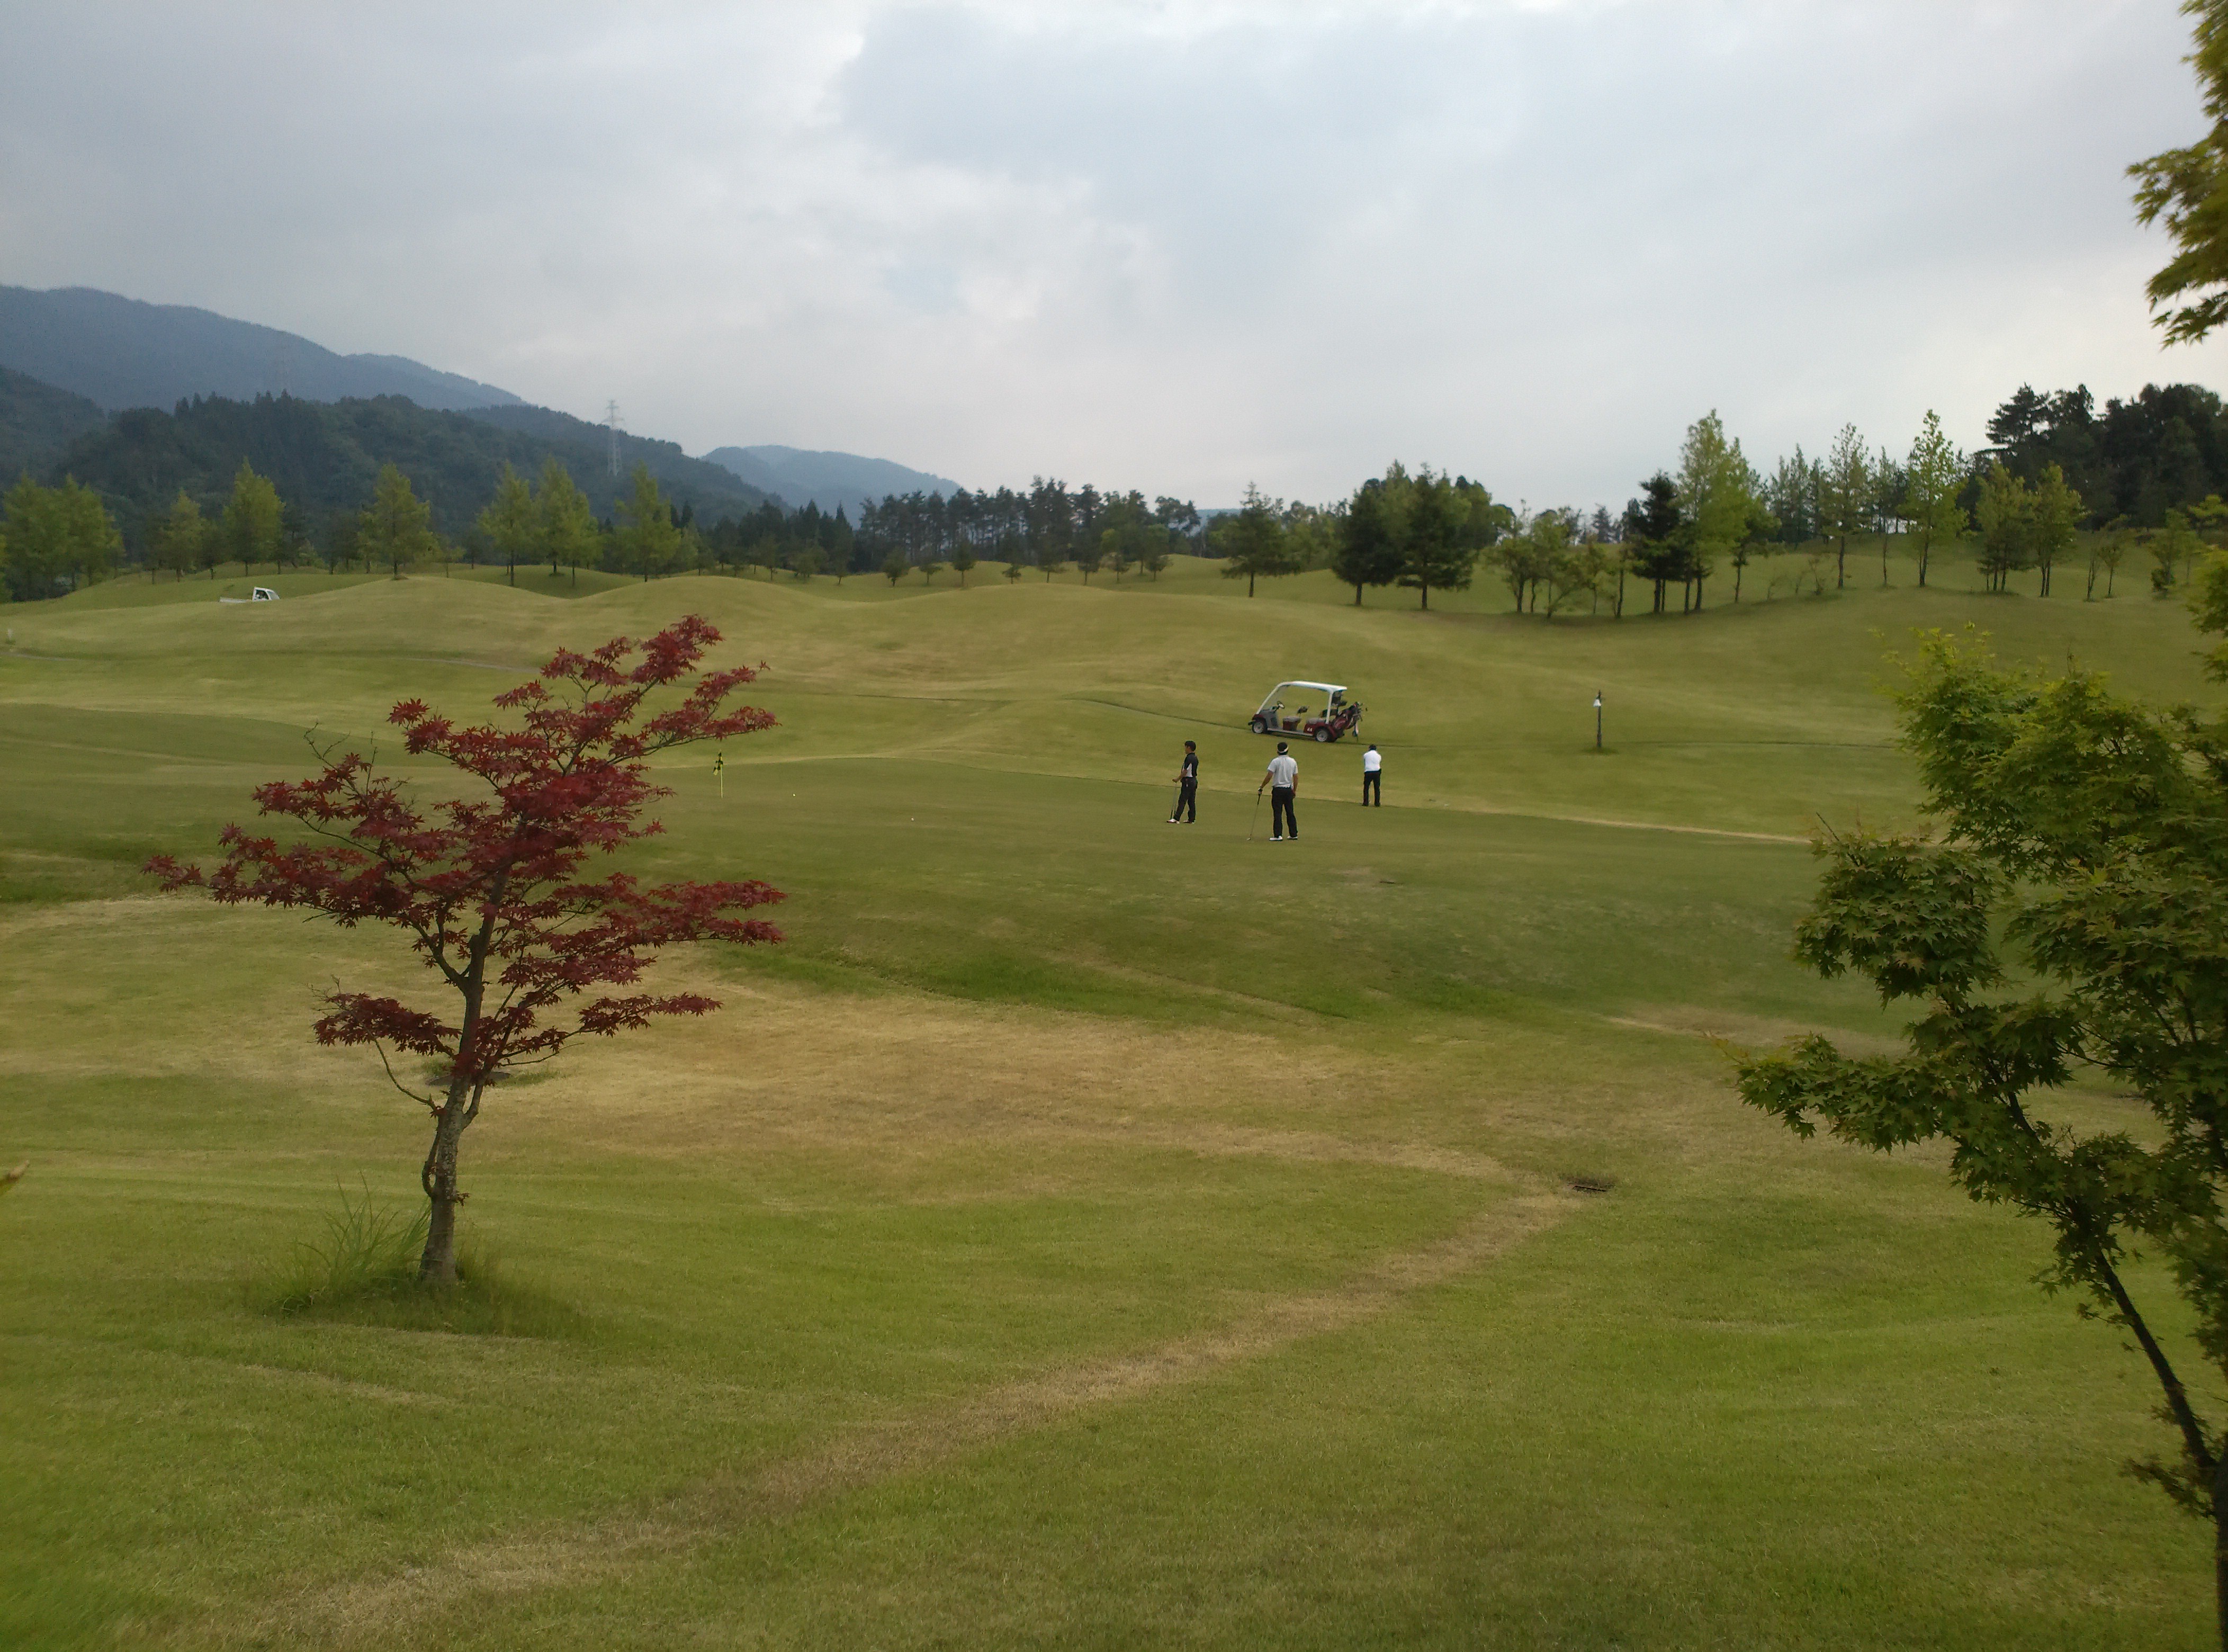 TOYAMA-IMPULSE WEBLOG: 青年部OB交流ゴルフ大会